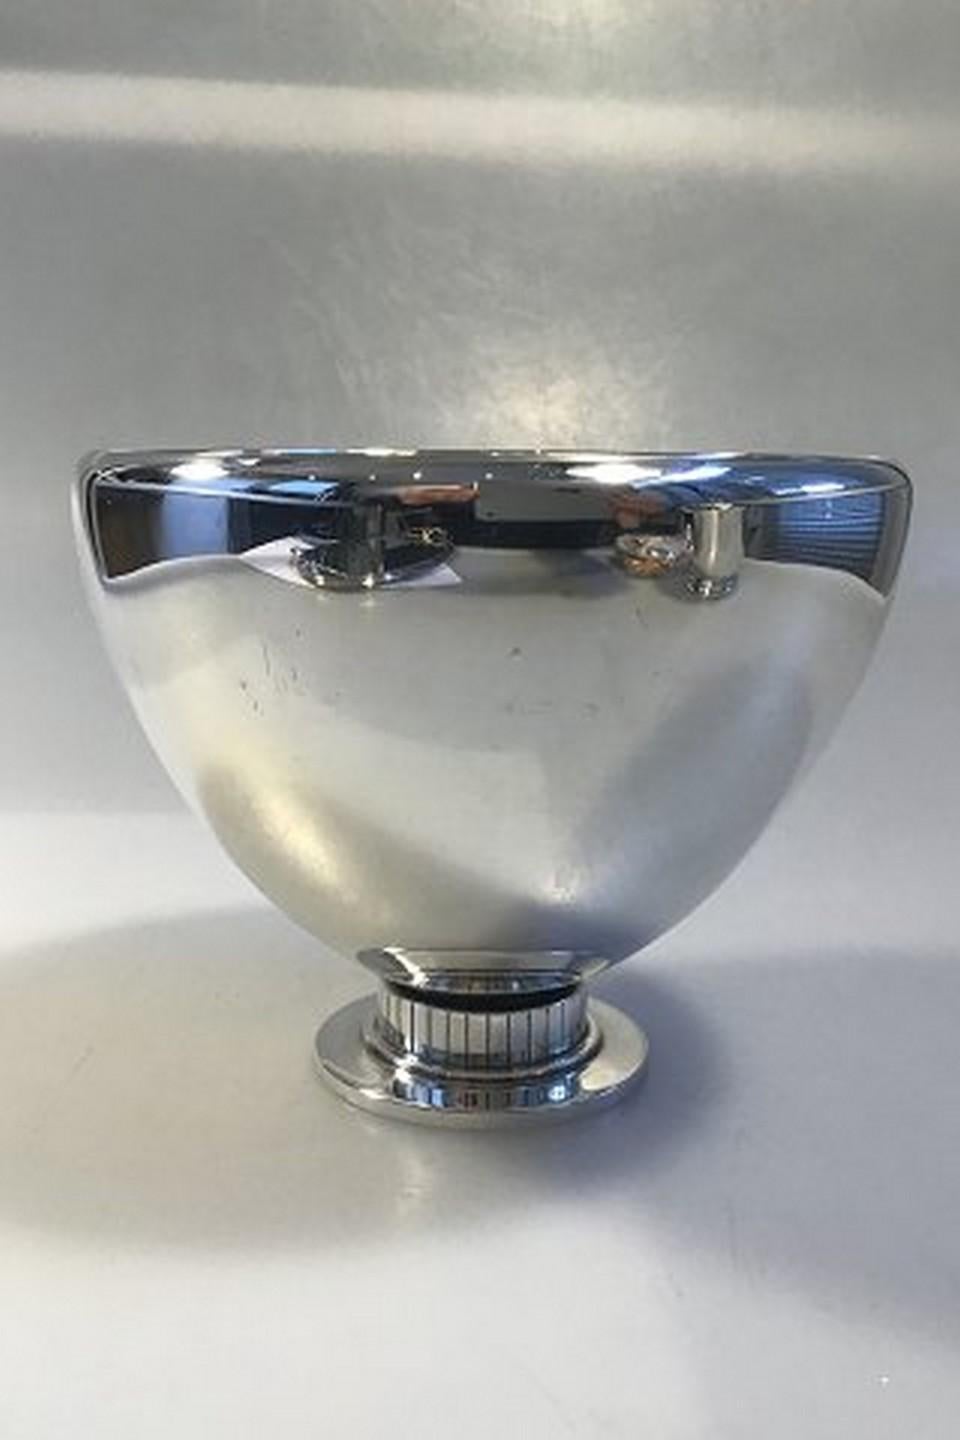 Georg Jensen sterling silver bowl no 918 Design Jørgen Jensen Measures height 10 cm (3 15/16 in) diameter 12.5 cm(4 59/64 in) Weight 277 gr/9.77 oz
Item no.: 449419.